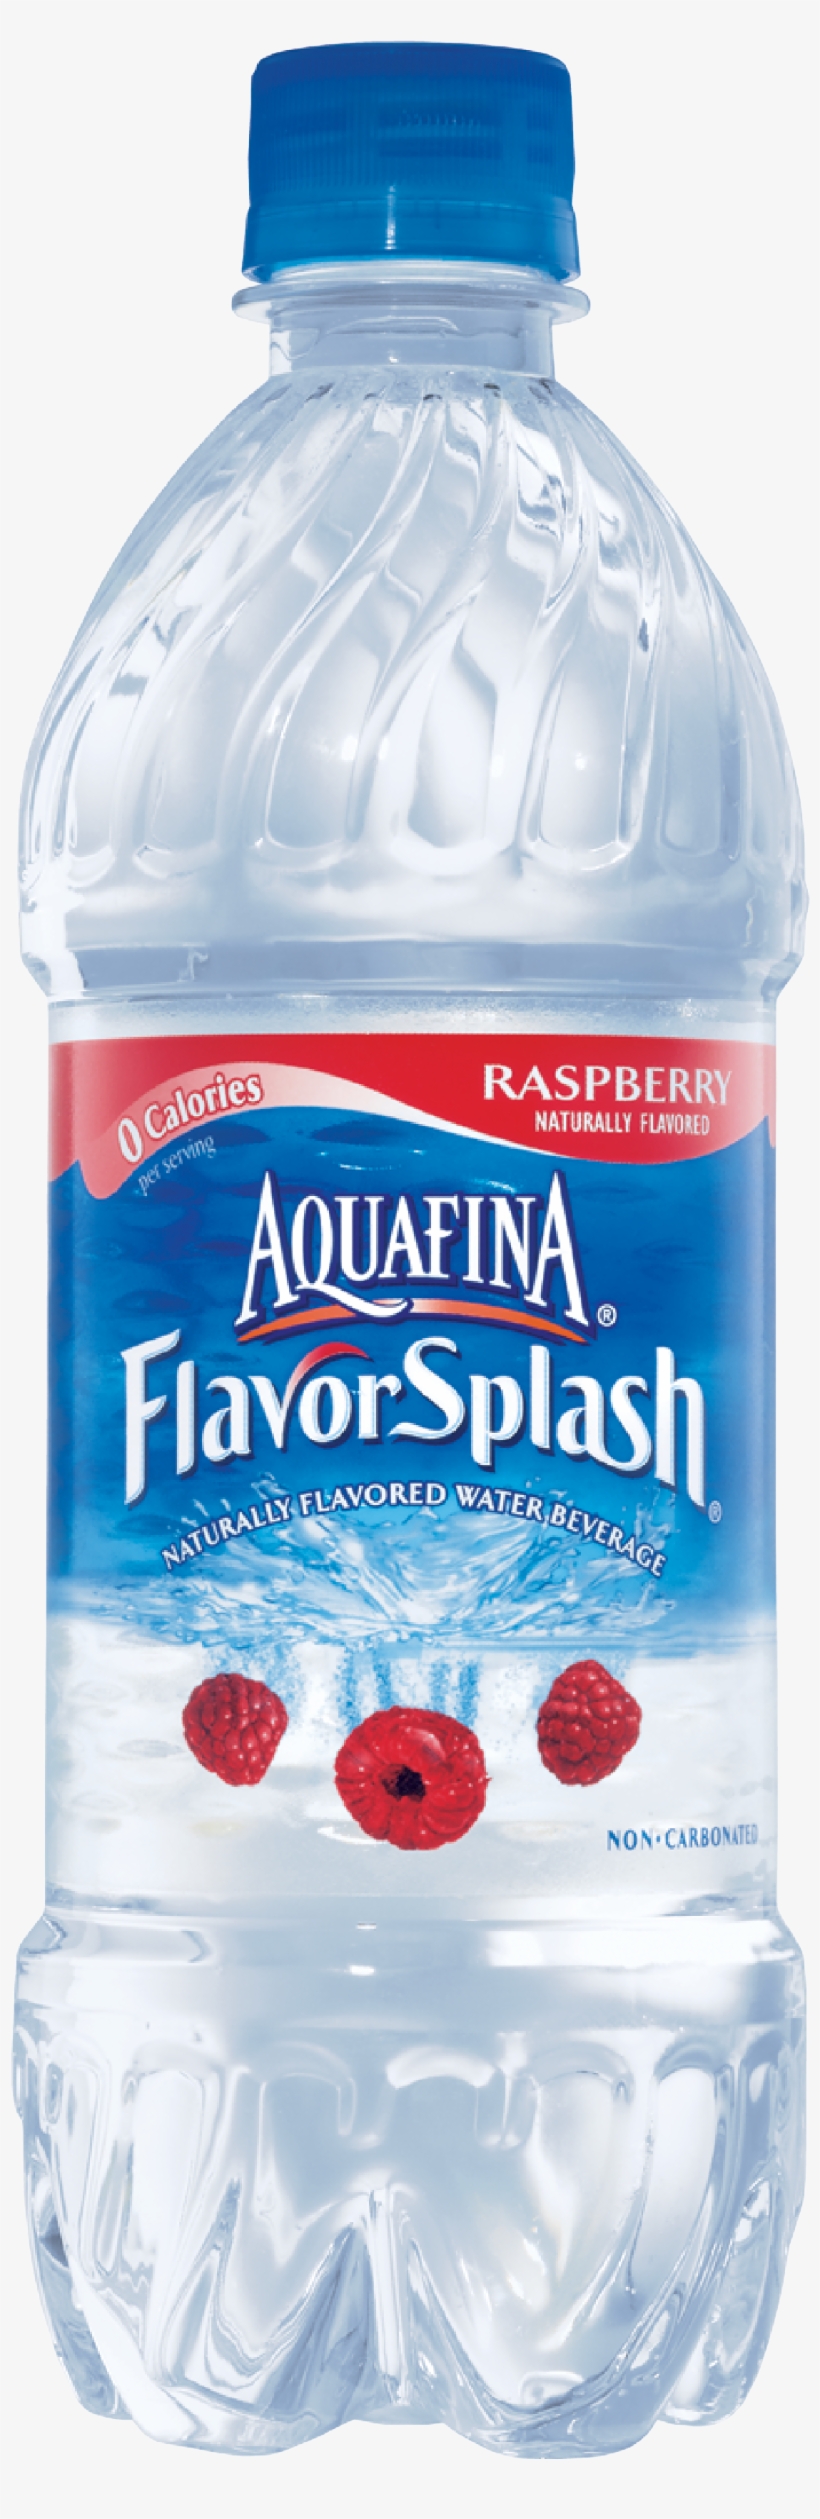 Aquafina Flavorsplash Raspberry - Aquafina Flavorsplash Raspberry Water 1 L Plastic Bottle, transparent png #3912745